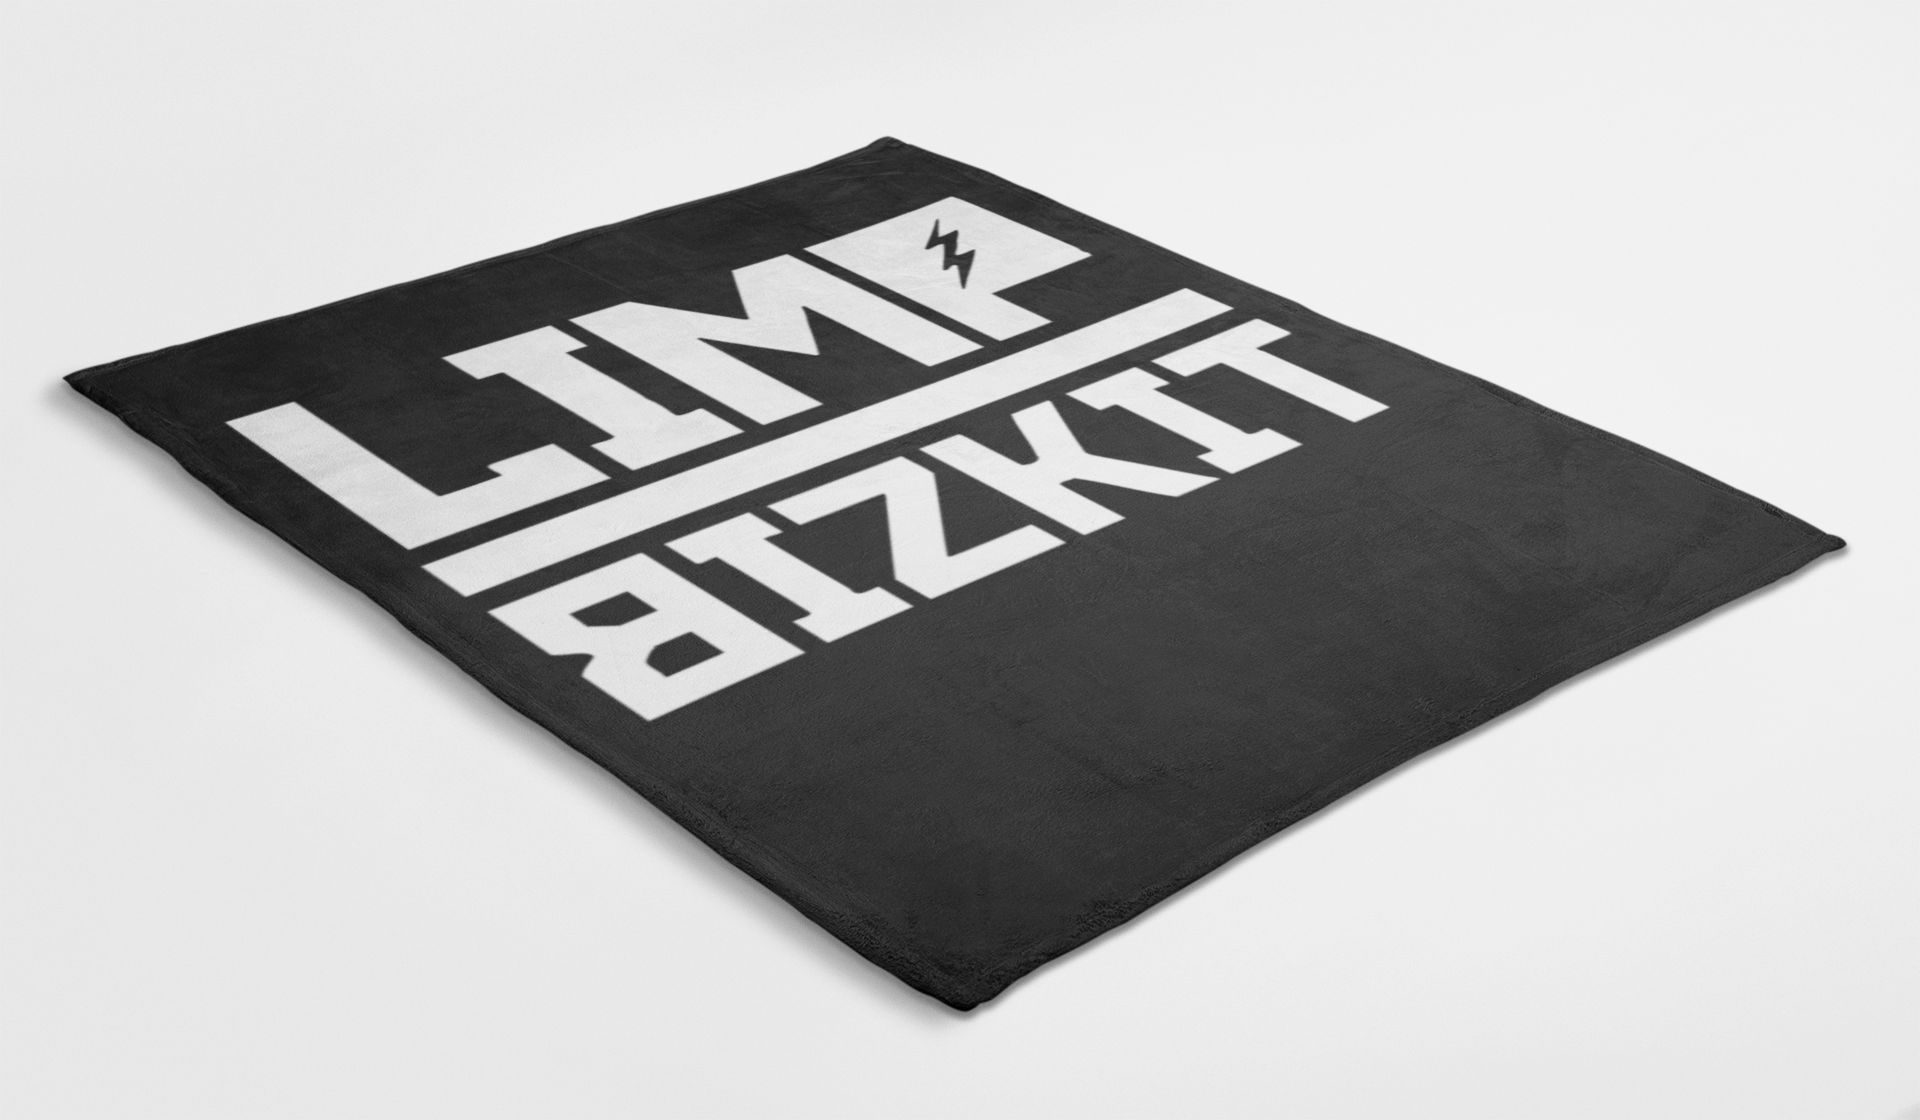 Limpbizkit Band Logo Blanket